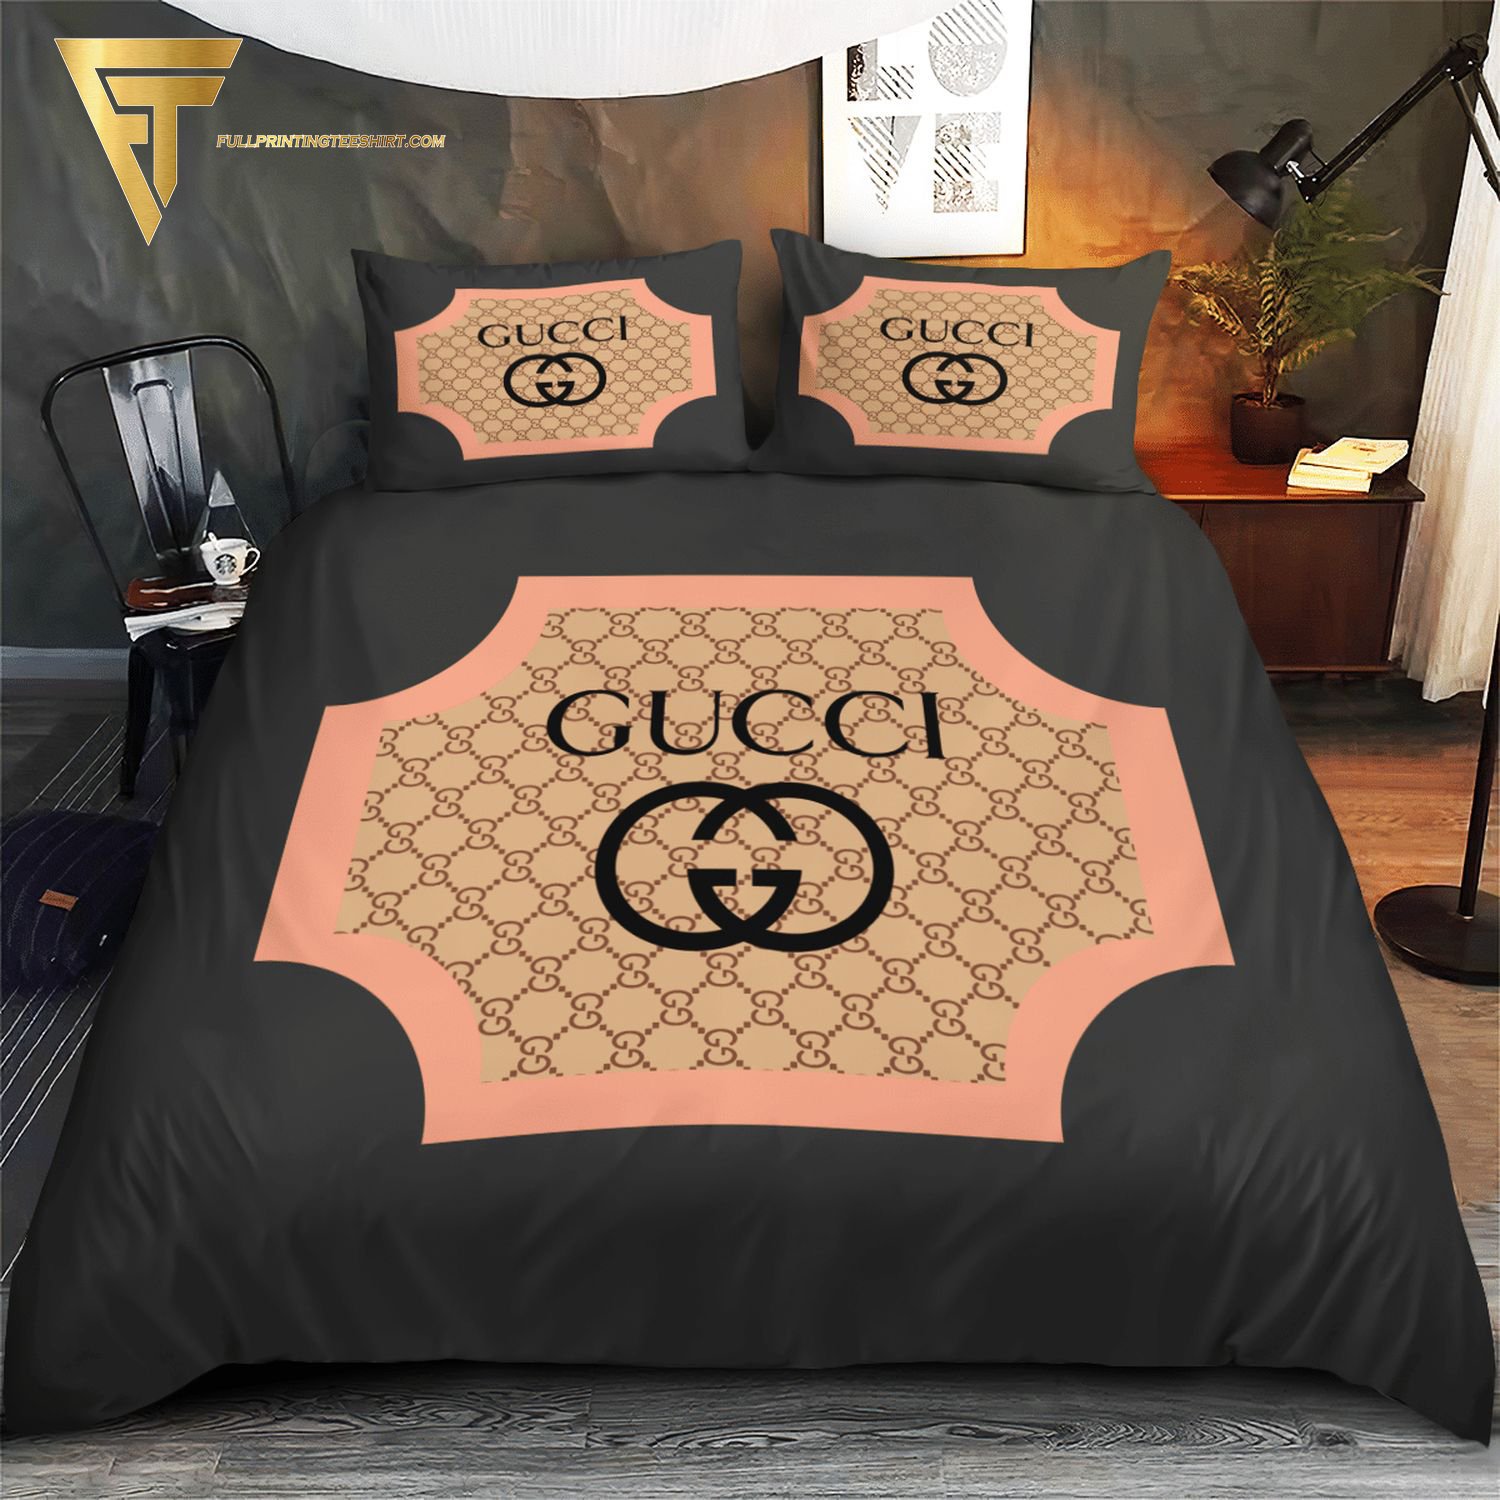 Gucci duvet covers